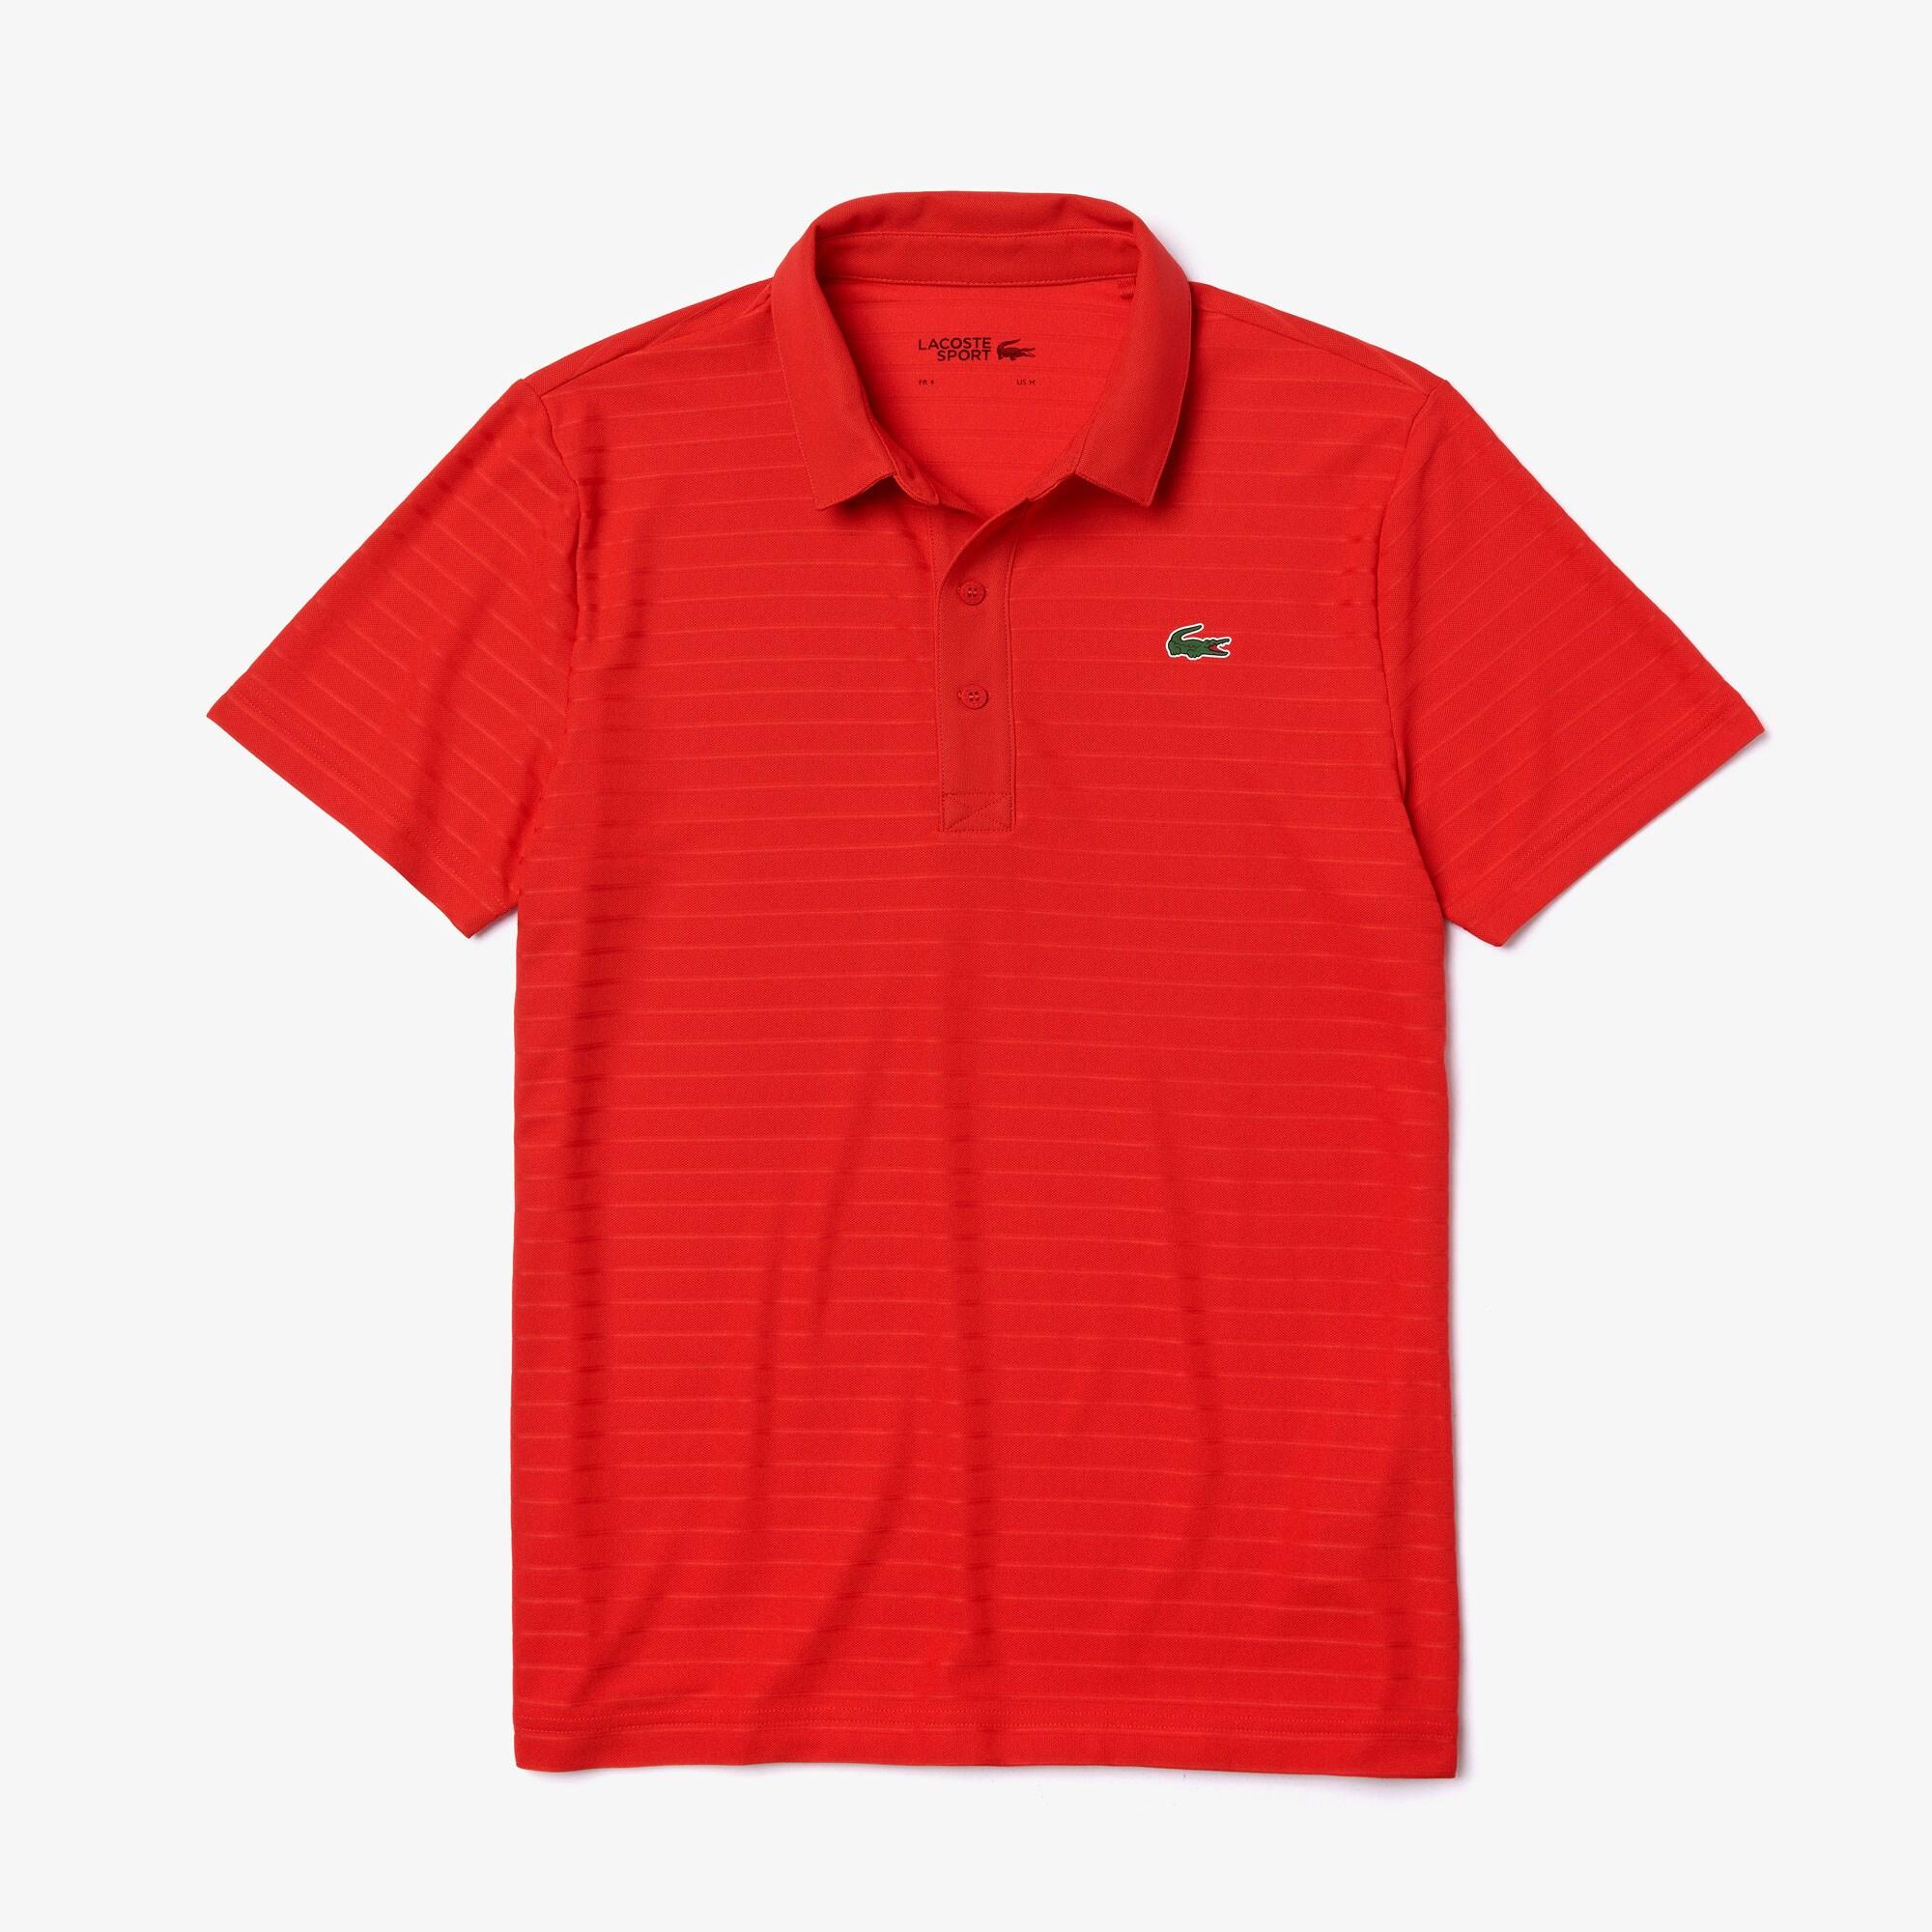 Lacoste Mens Golf Striped Tech Jacquard Jersey Polo - Red - Tennisnuts.com